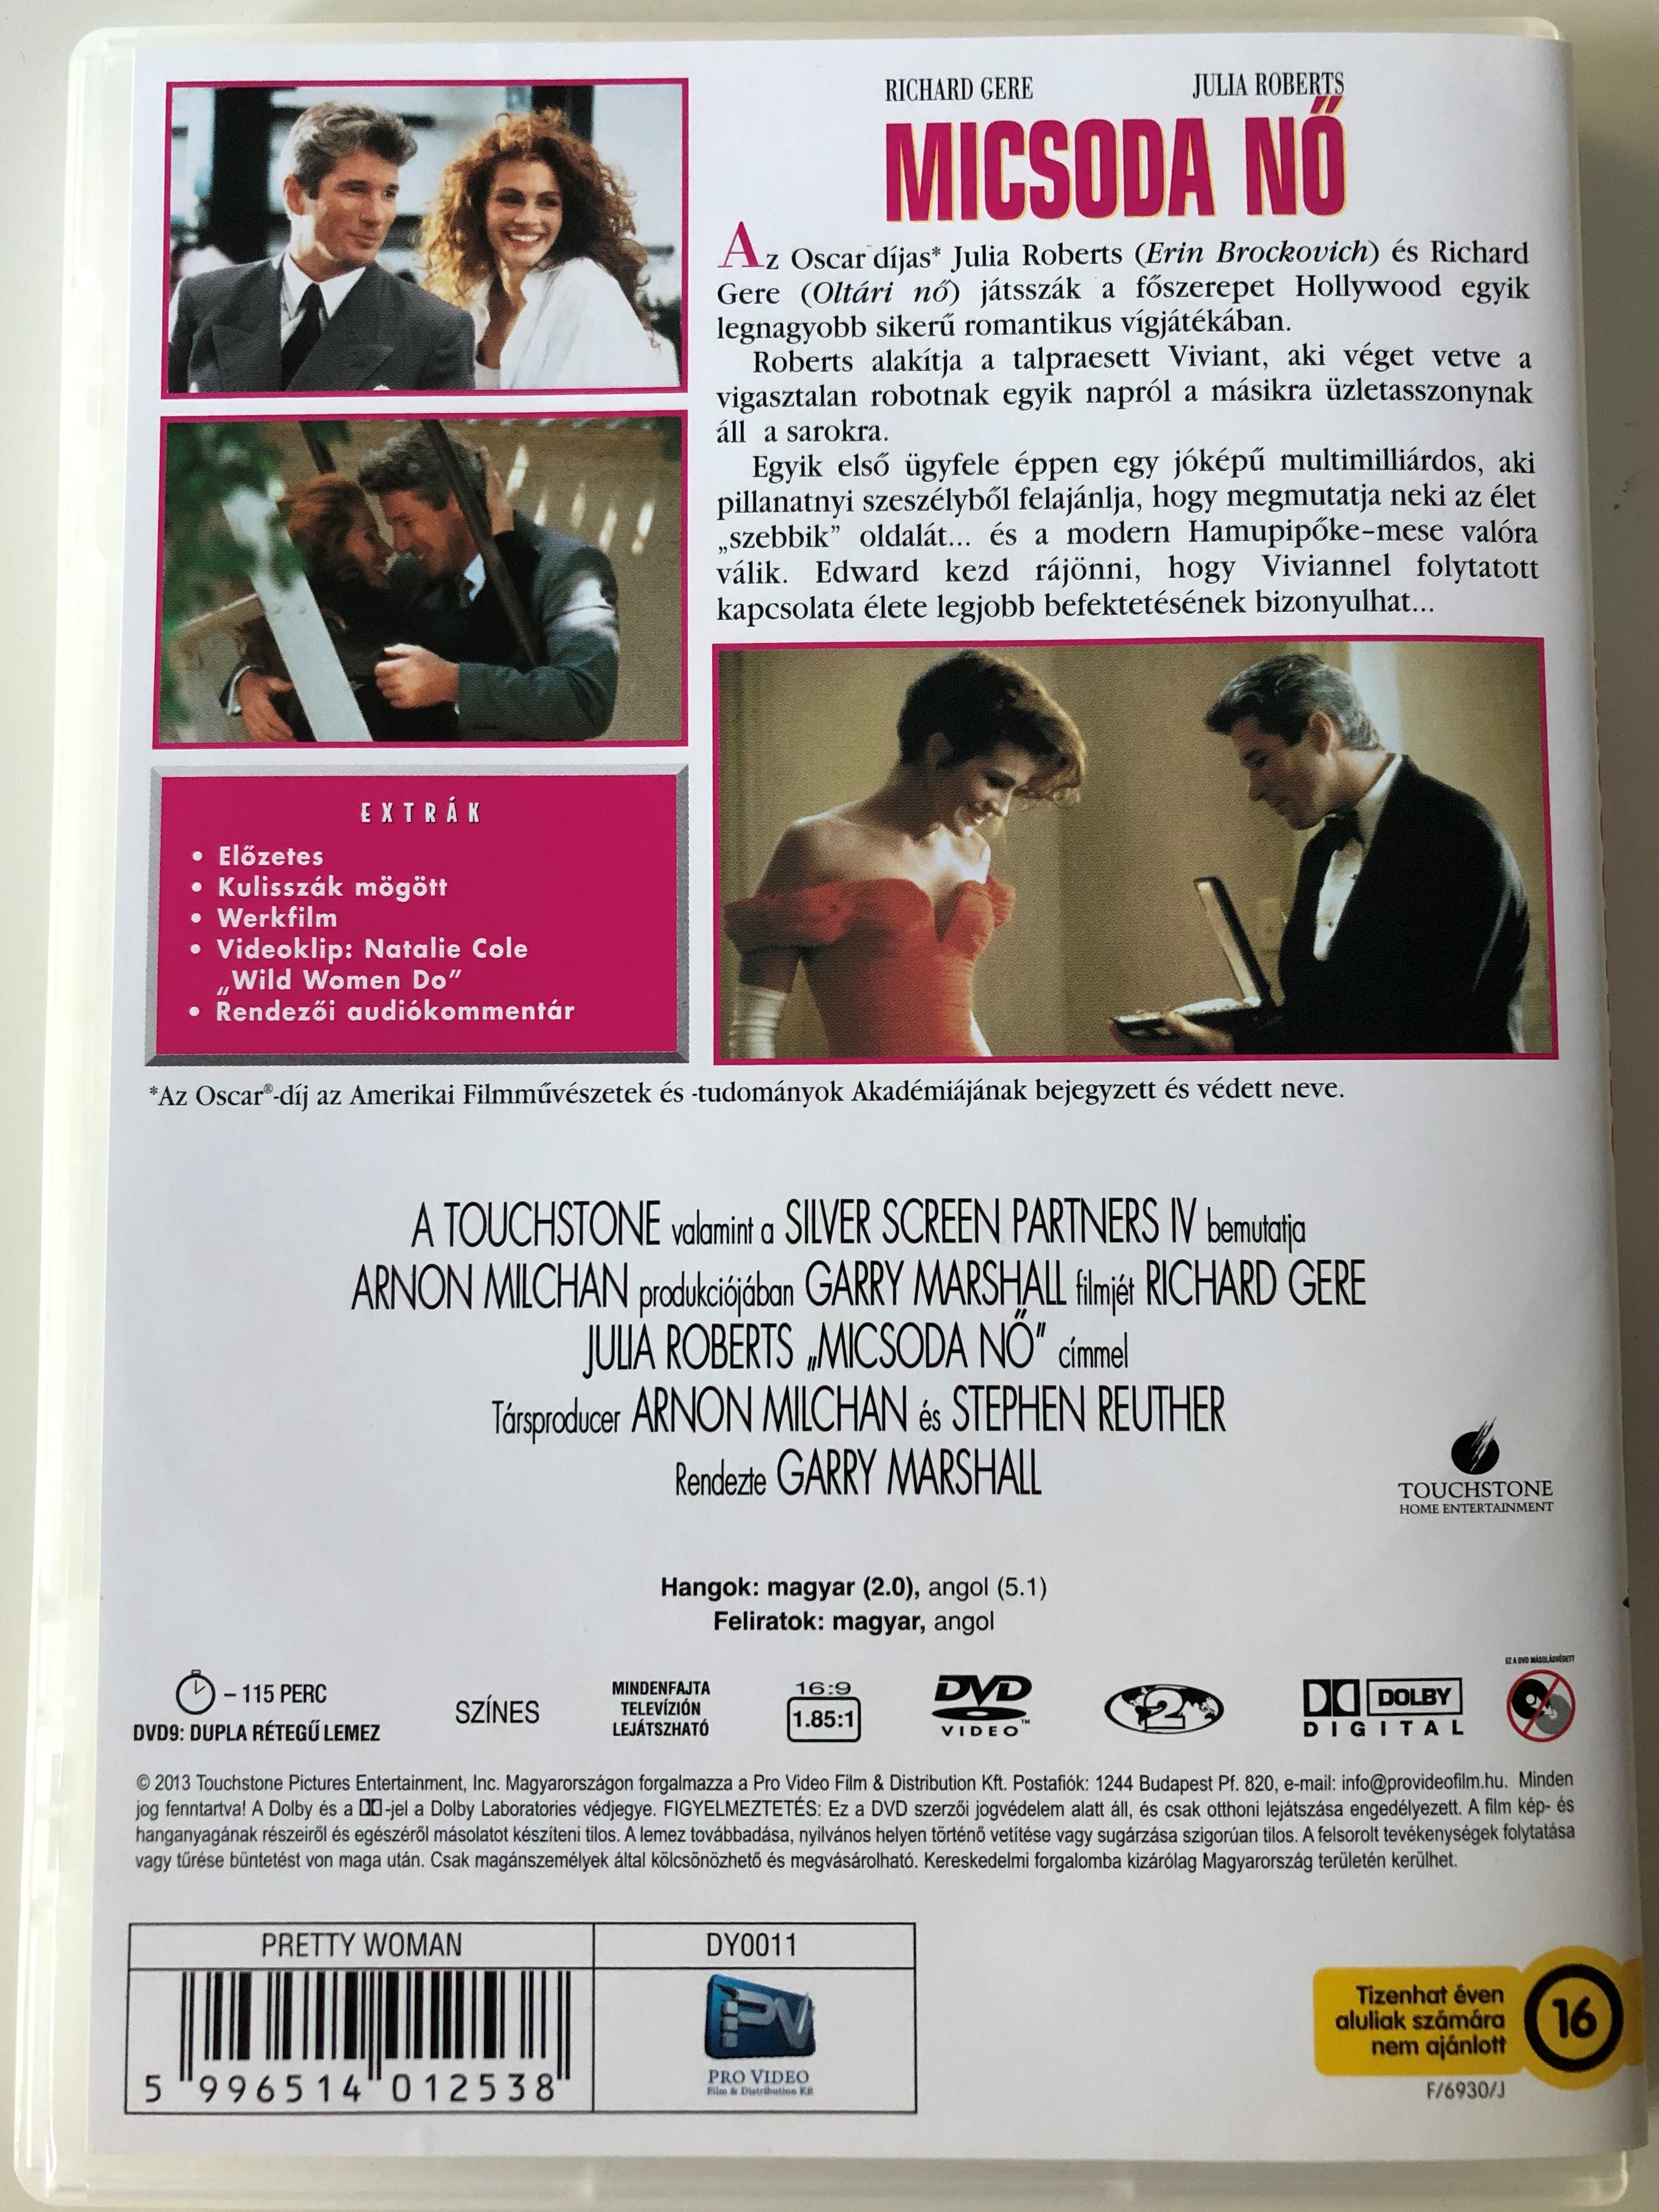 Pretty Woman - Micsoda nő DVD 1990 Bónusz kisfilm / Directed by Garry  Marshall / Starring. Richard Gere, Julia Roberts / Hungarian Special  Edition - bibleinmylanguage